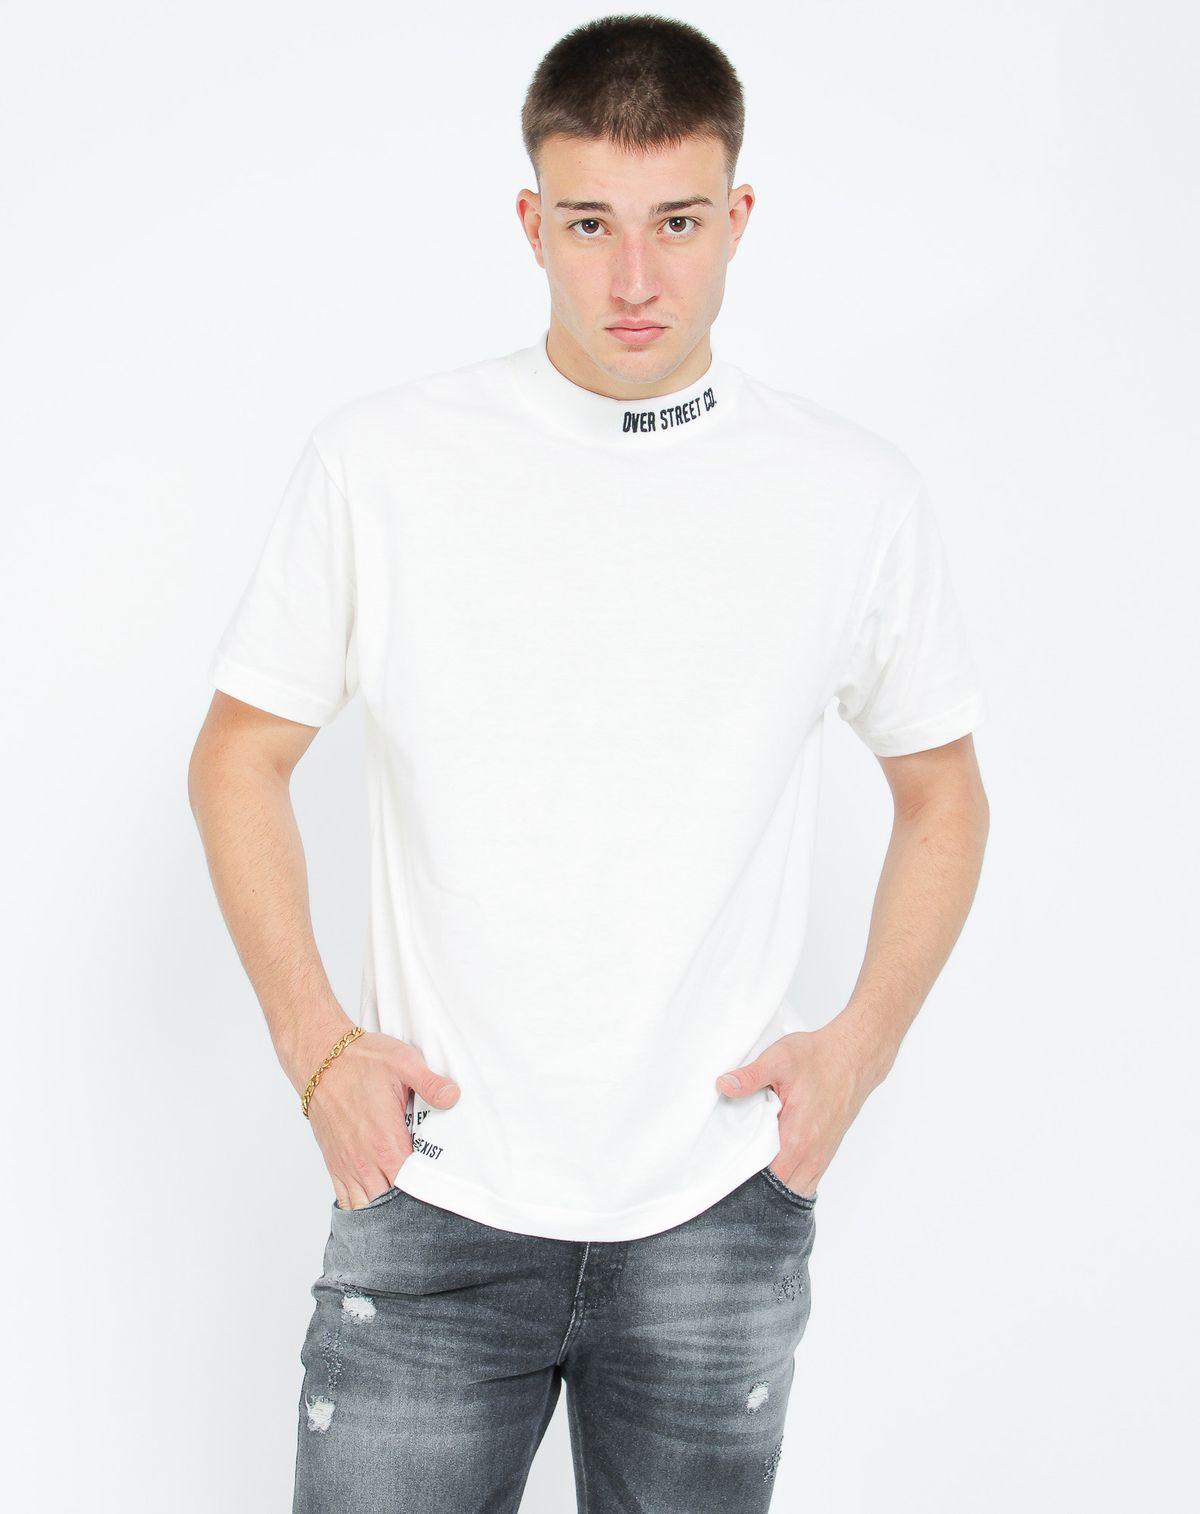 684121008-camiseta-manga-curta-masculina-gola-lettering-off-white-gg-65a